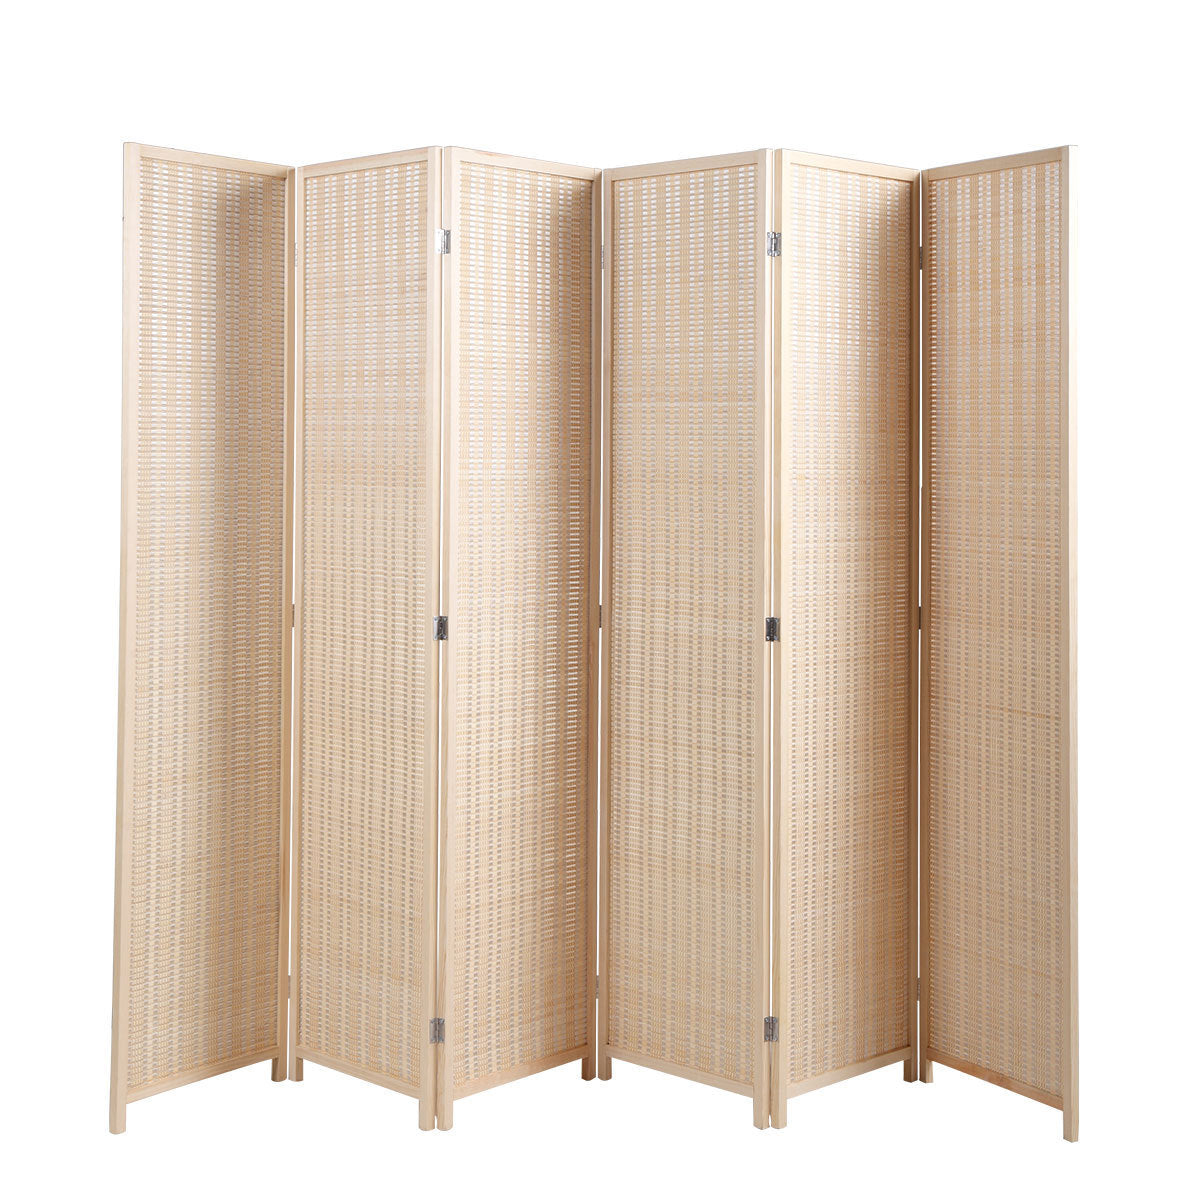 6 Panel Bamboo Room Divider